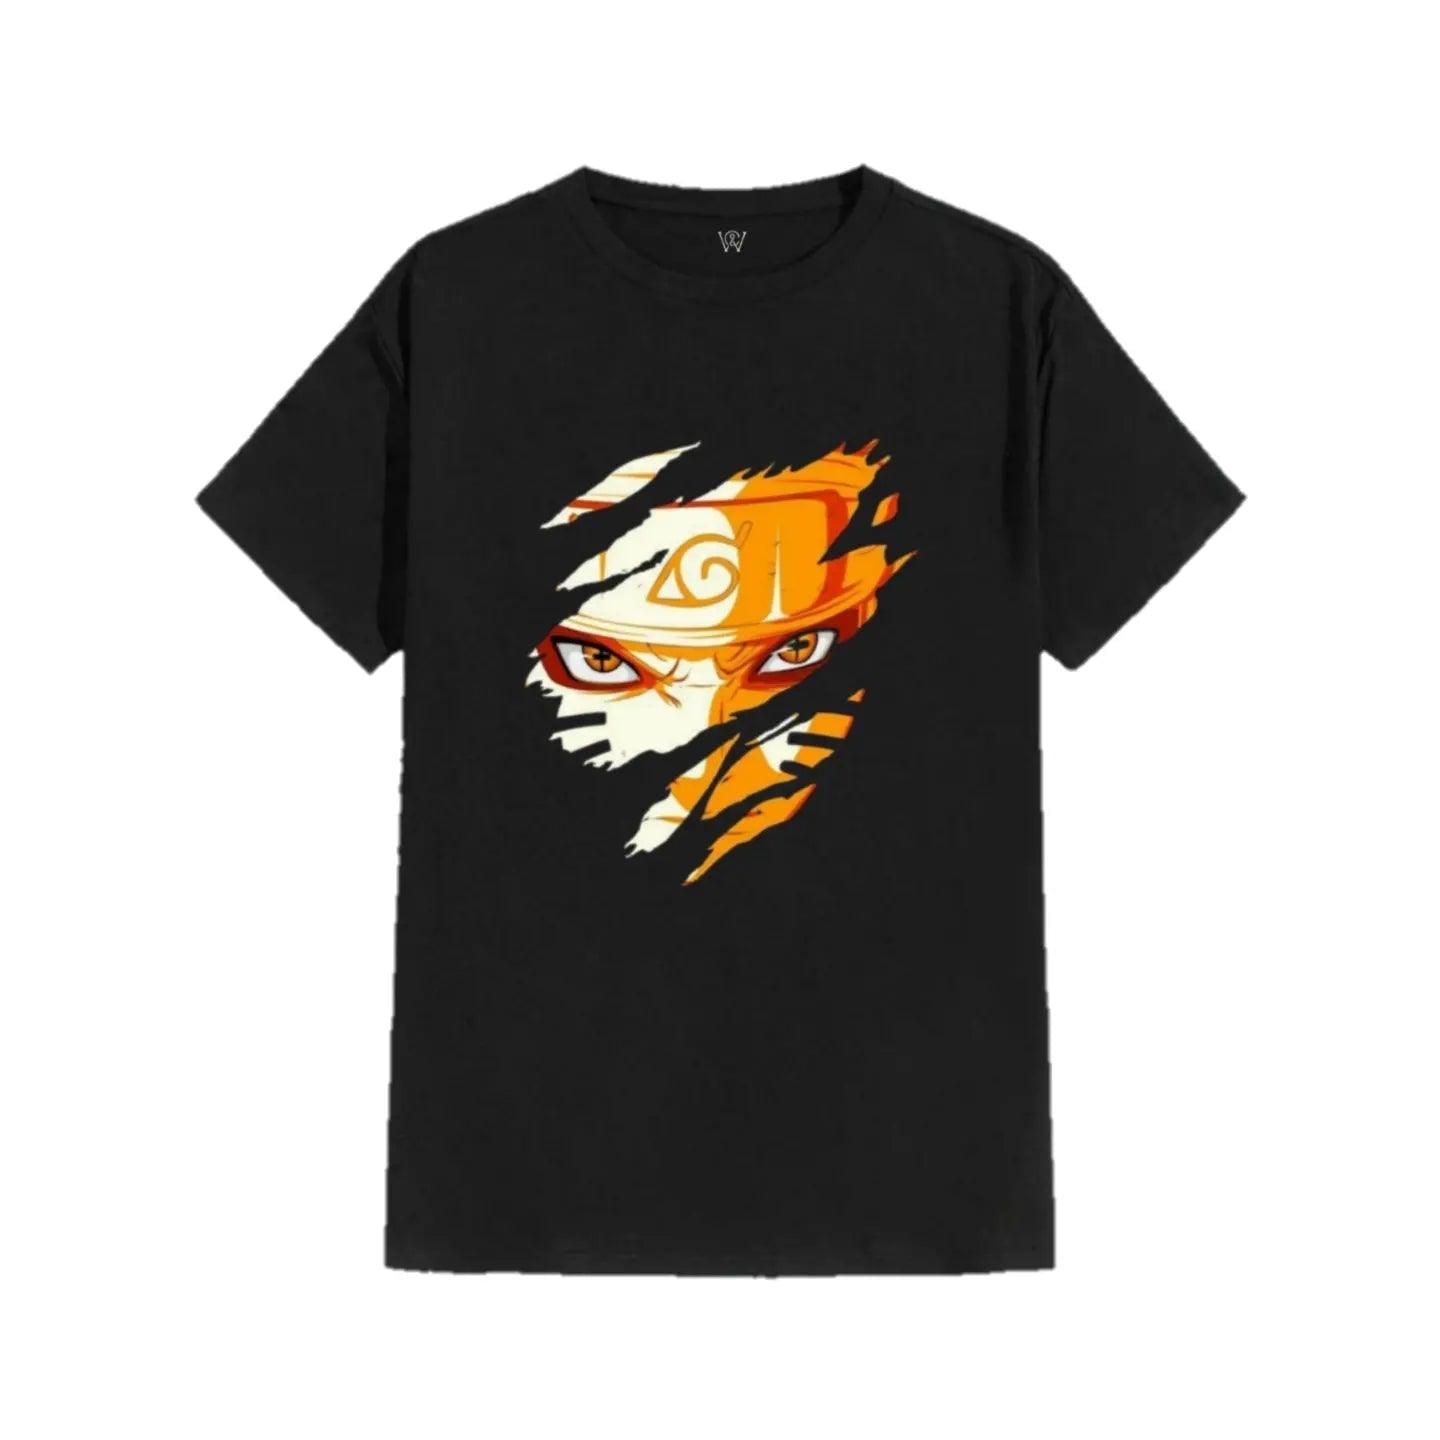 Naruto Uzumaki ( The Nine Tailed Fox) - Getsetwear